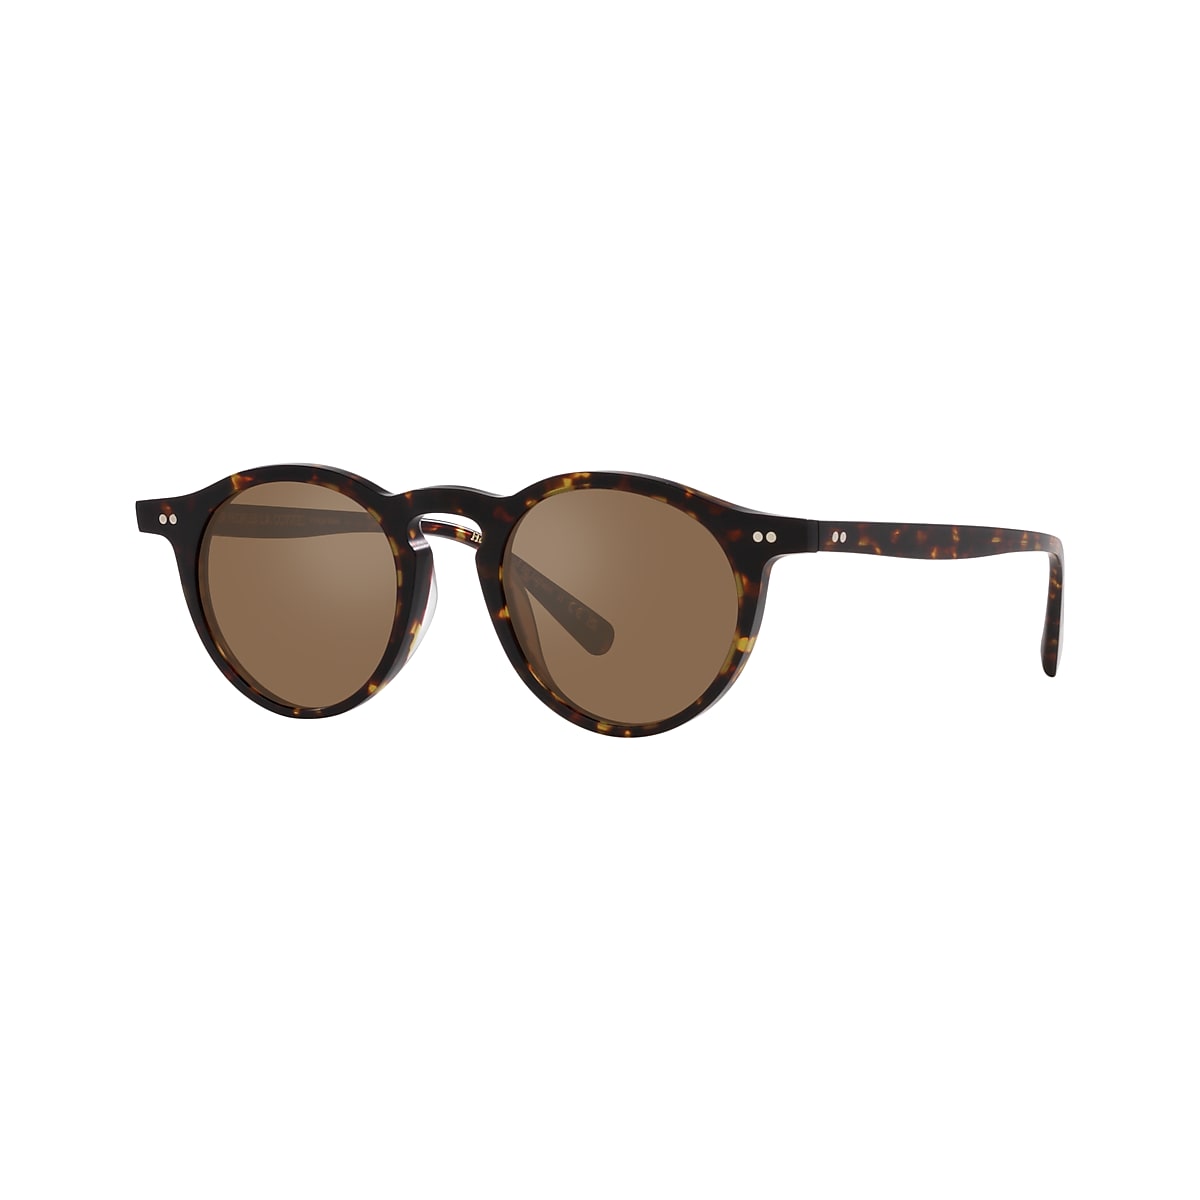 Oliver OP-13 Sun Sunglasses in Semi-Matte Atago Tortoise | Oliver®